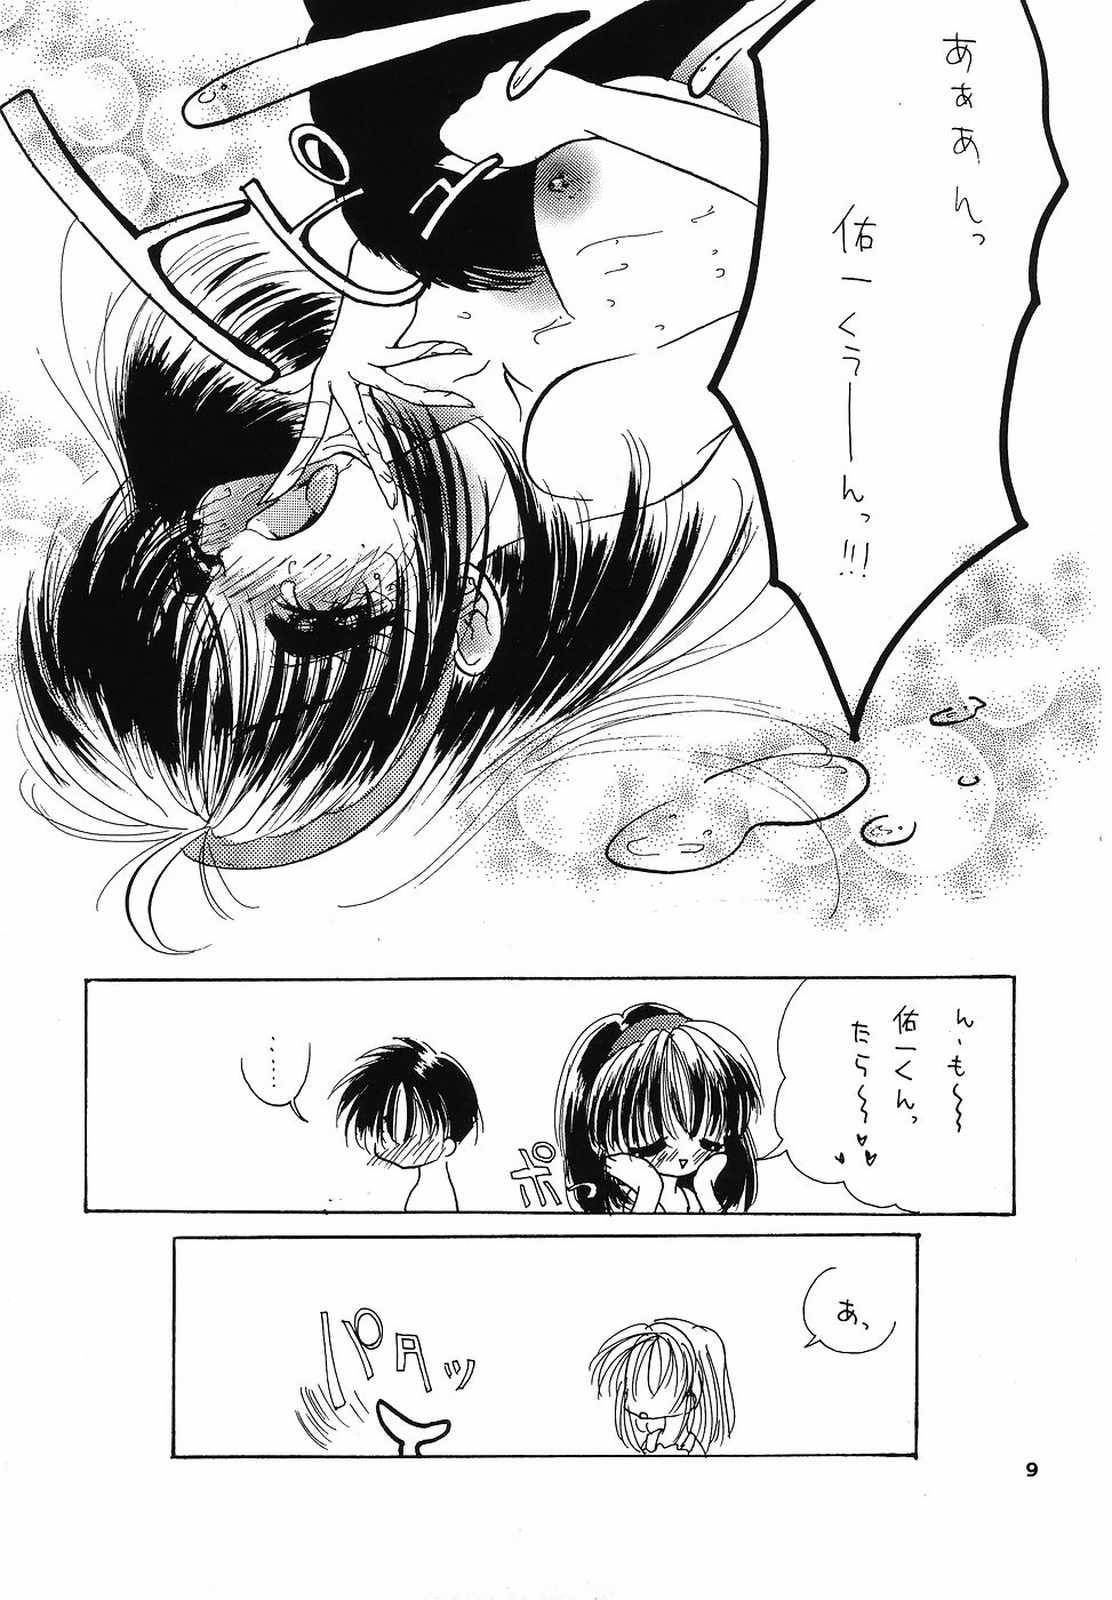 Shoplifter eroero Vol.4 - Sakura taisen Kanon Outdoor - Page 8